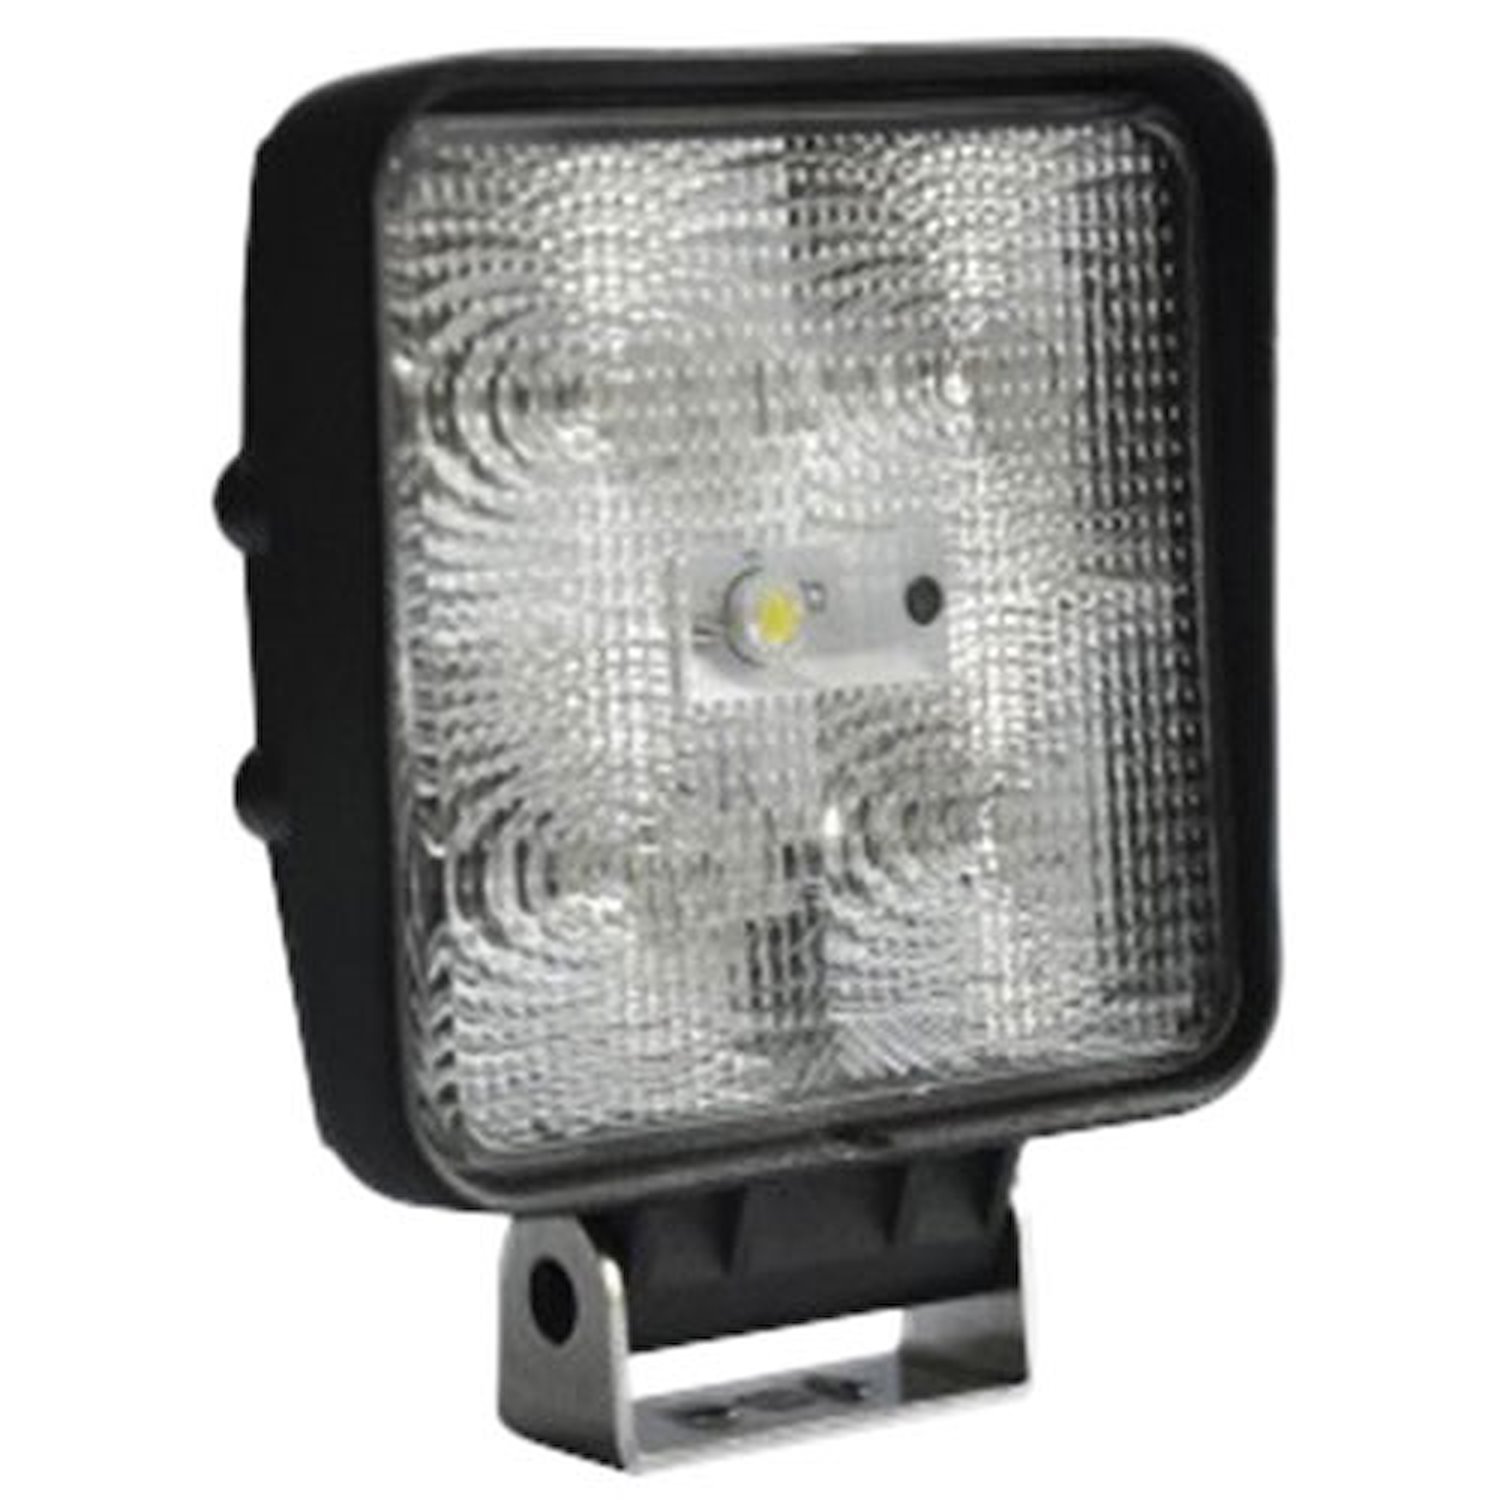 LED Utility Light 4.5" Square Case